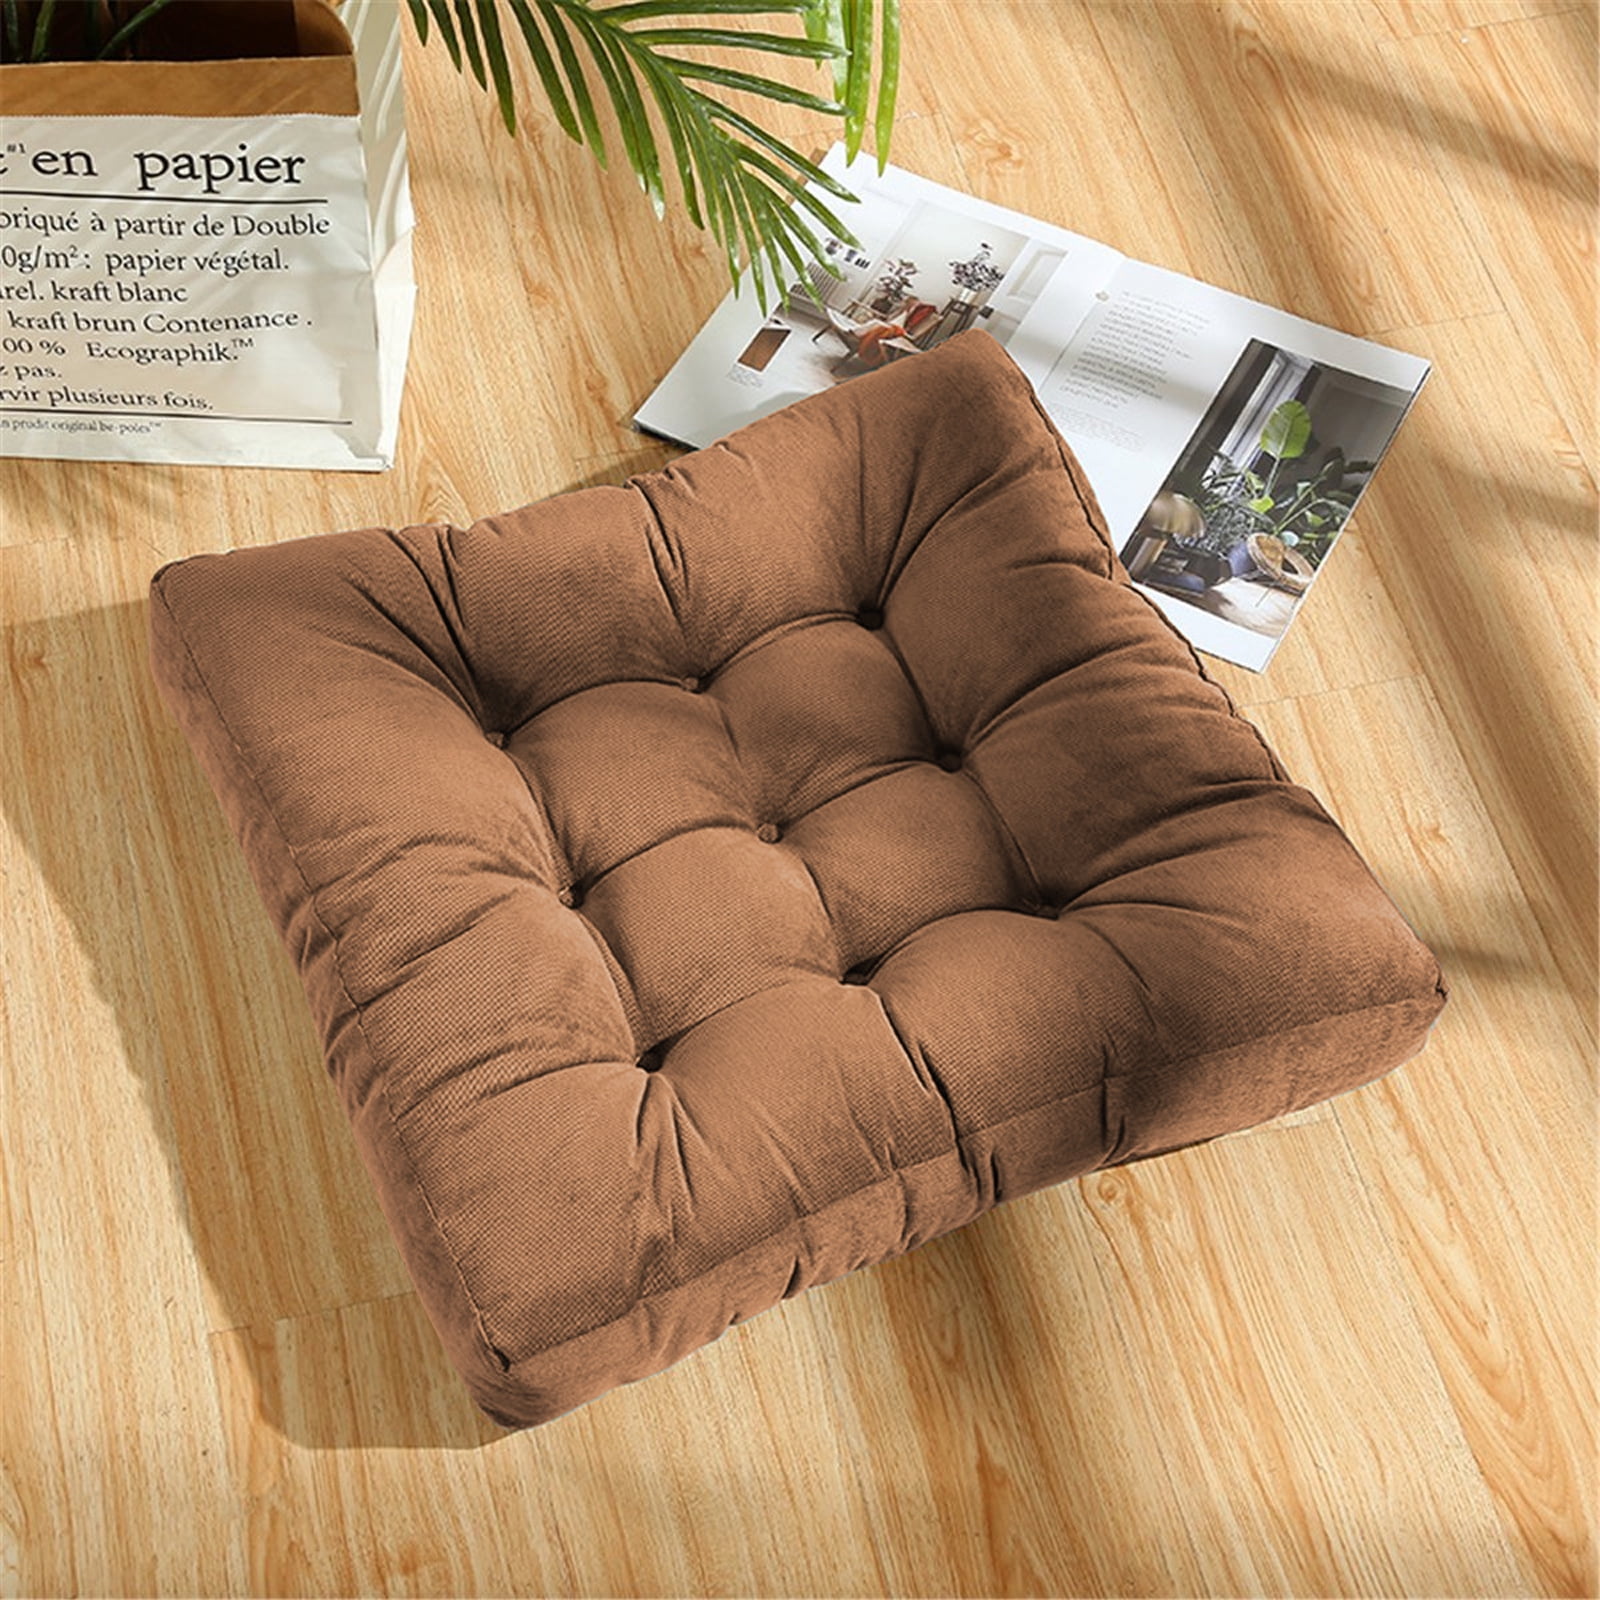 Boho Square Floor Seat Pillows Cushions 22 x 22, Soft Cotton Linen  Bohemian Yoga Mandala Meditation Pouf Tatami Floor Pillow Cushion for  Living Room